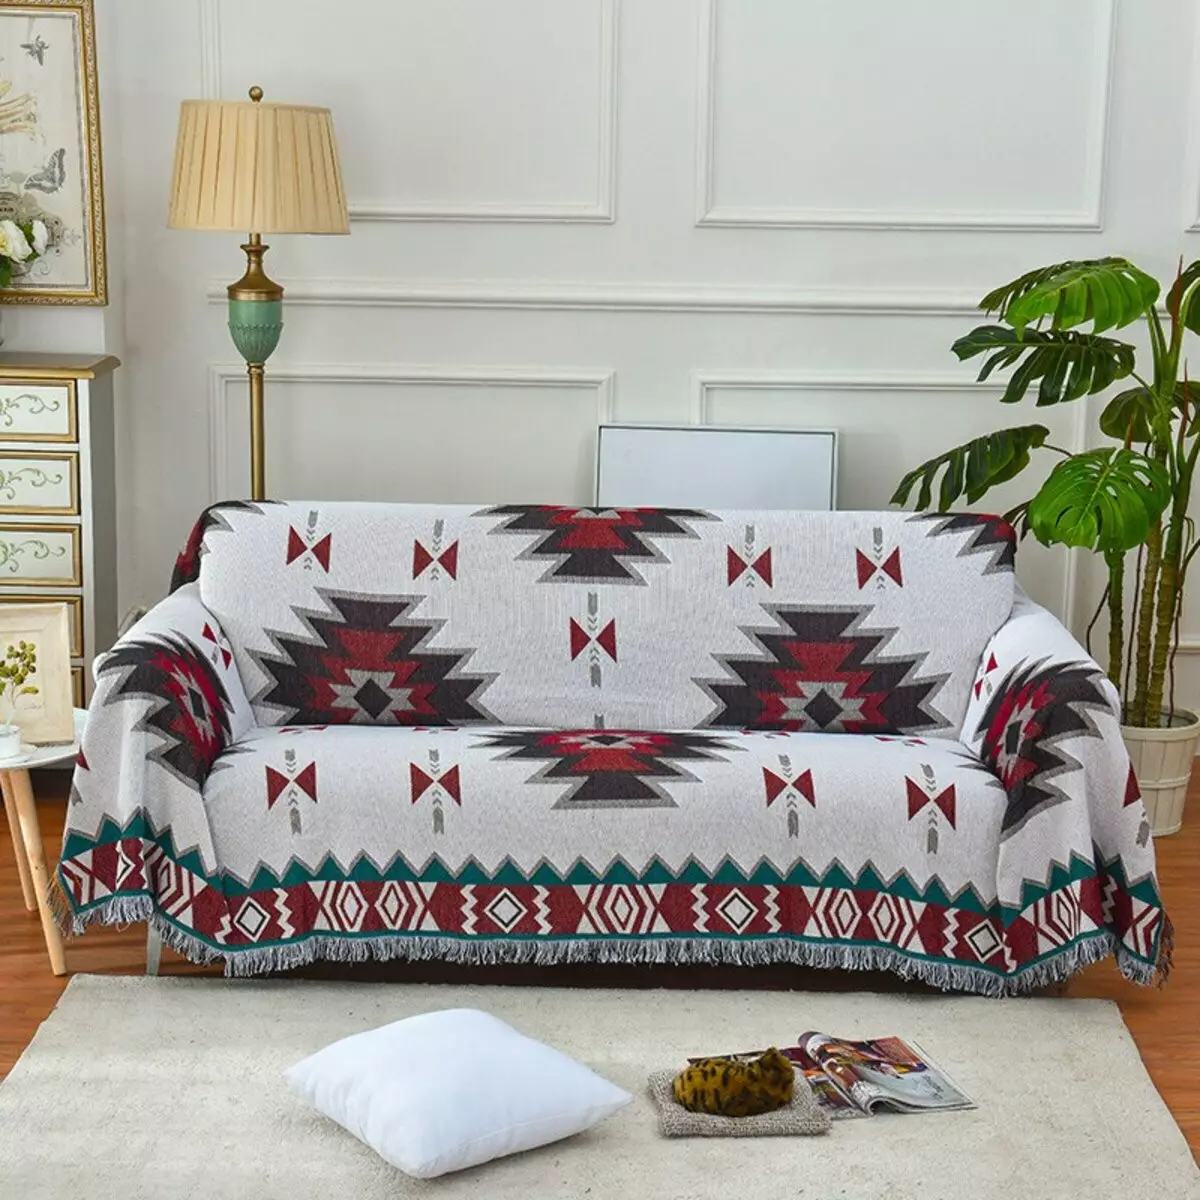 ସୋଫାବେଡ IKEA ଉପରେ କେସ୍: armrests ବିନା କଣ sofas ପାଇଁ bedspreads, ବିଶ୍ଵସ୍ତରୀୟ ଢ଼ାଲ ଓ ଅନ୍ୟାନ୍ୟ ବିକଳ୍ପ ଚୟନକୁ 8963_44